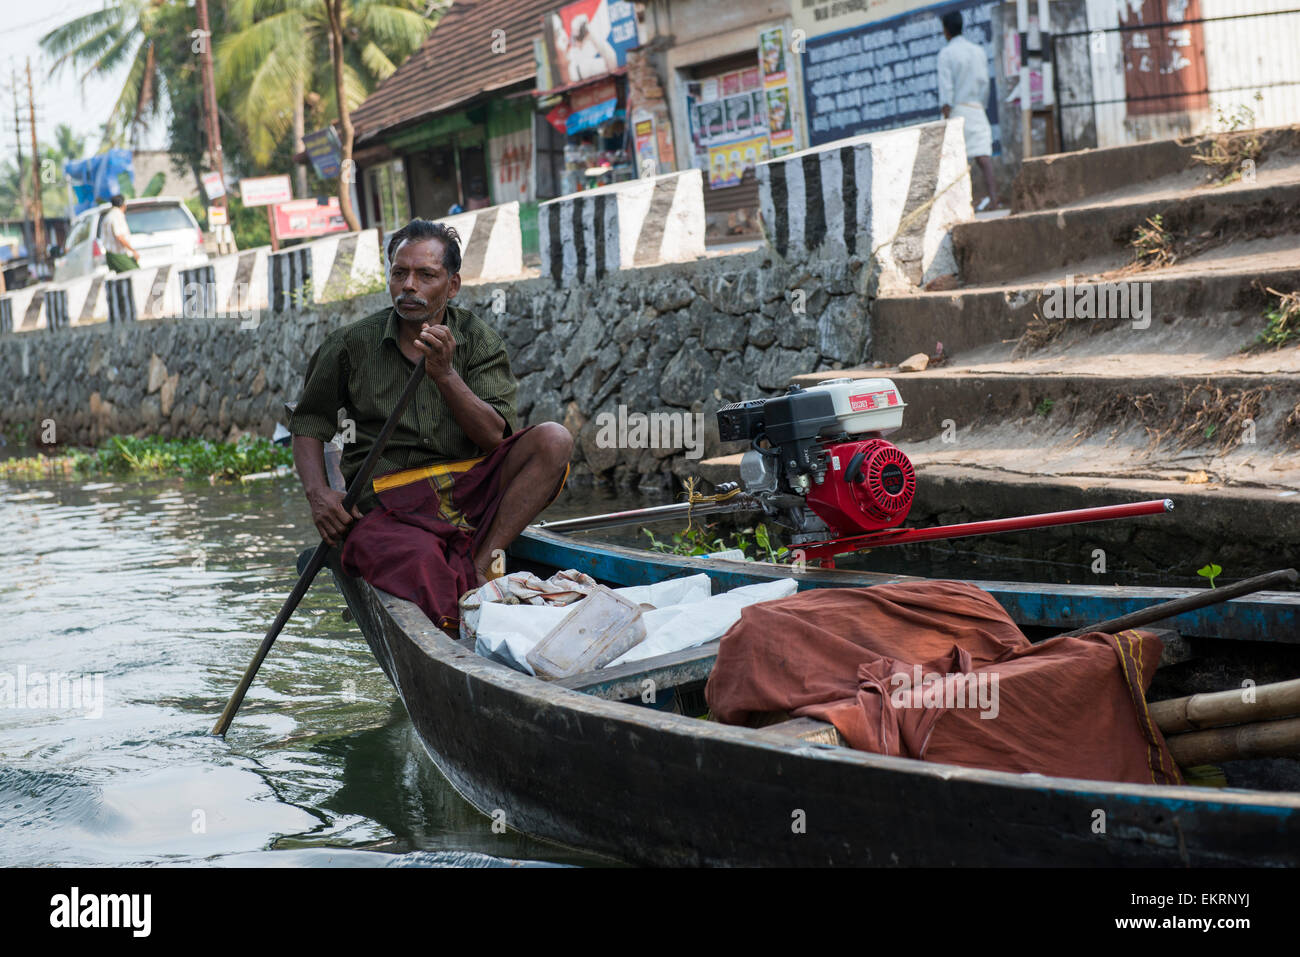 A man in a motor boat on the Backwaters of Kumarakom, Kerala India Stock Photo